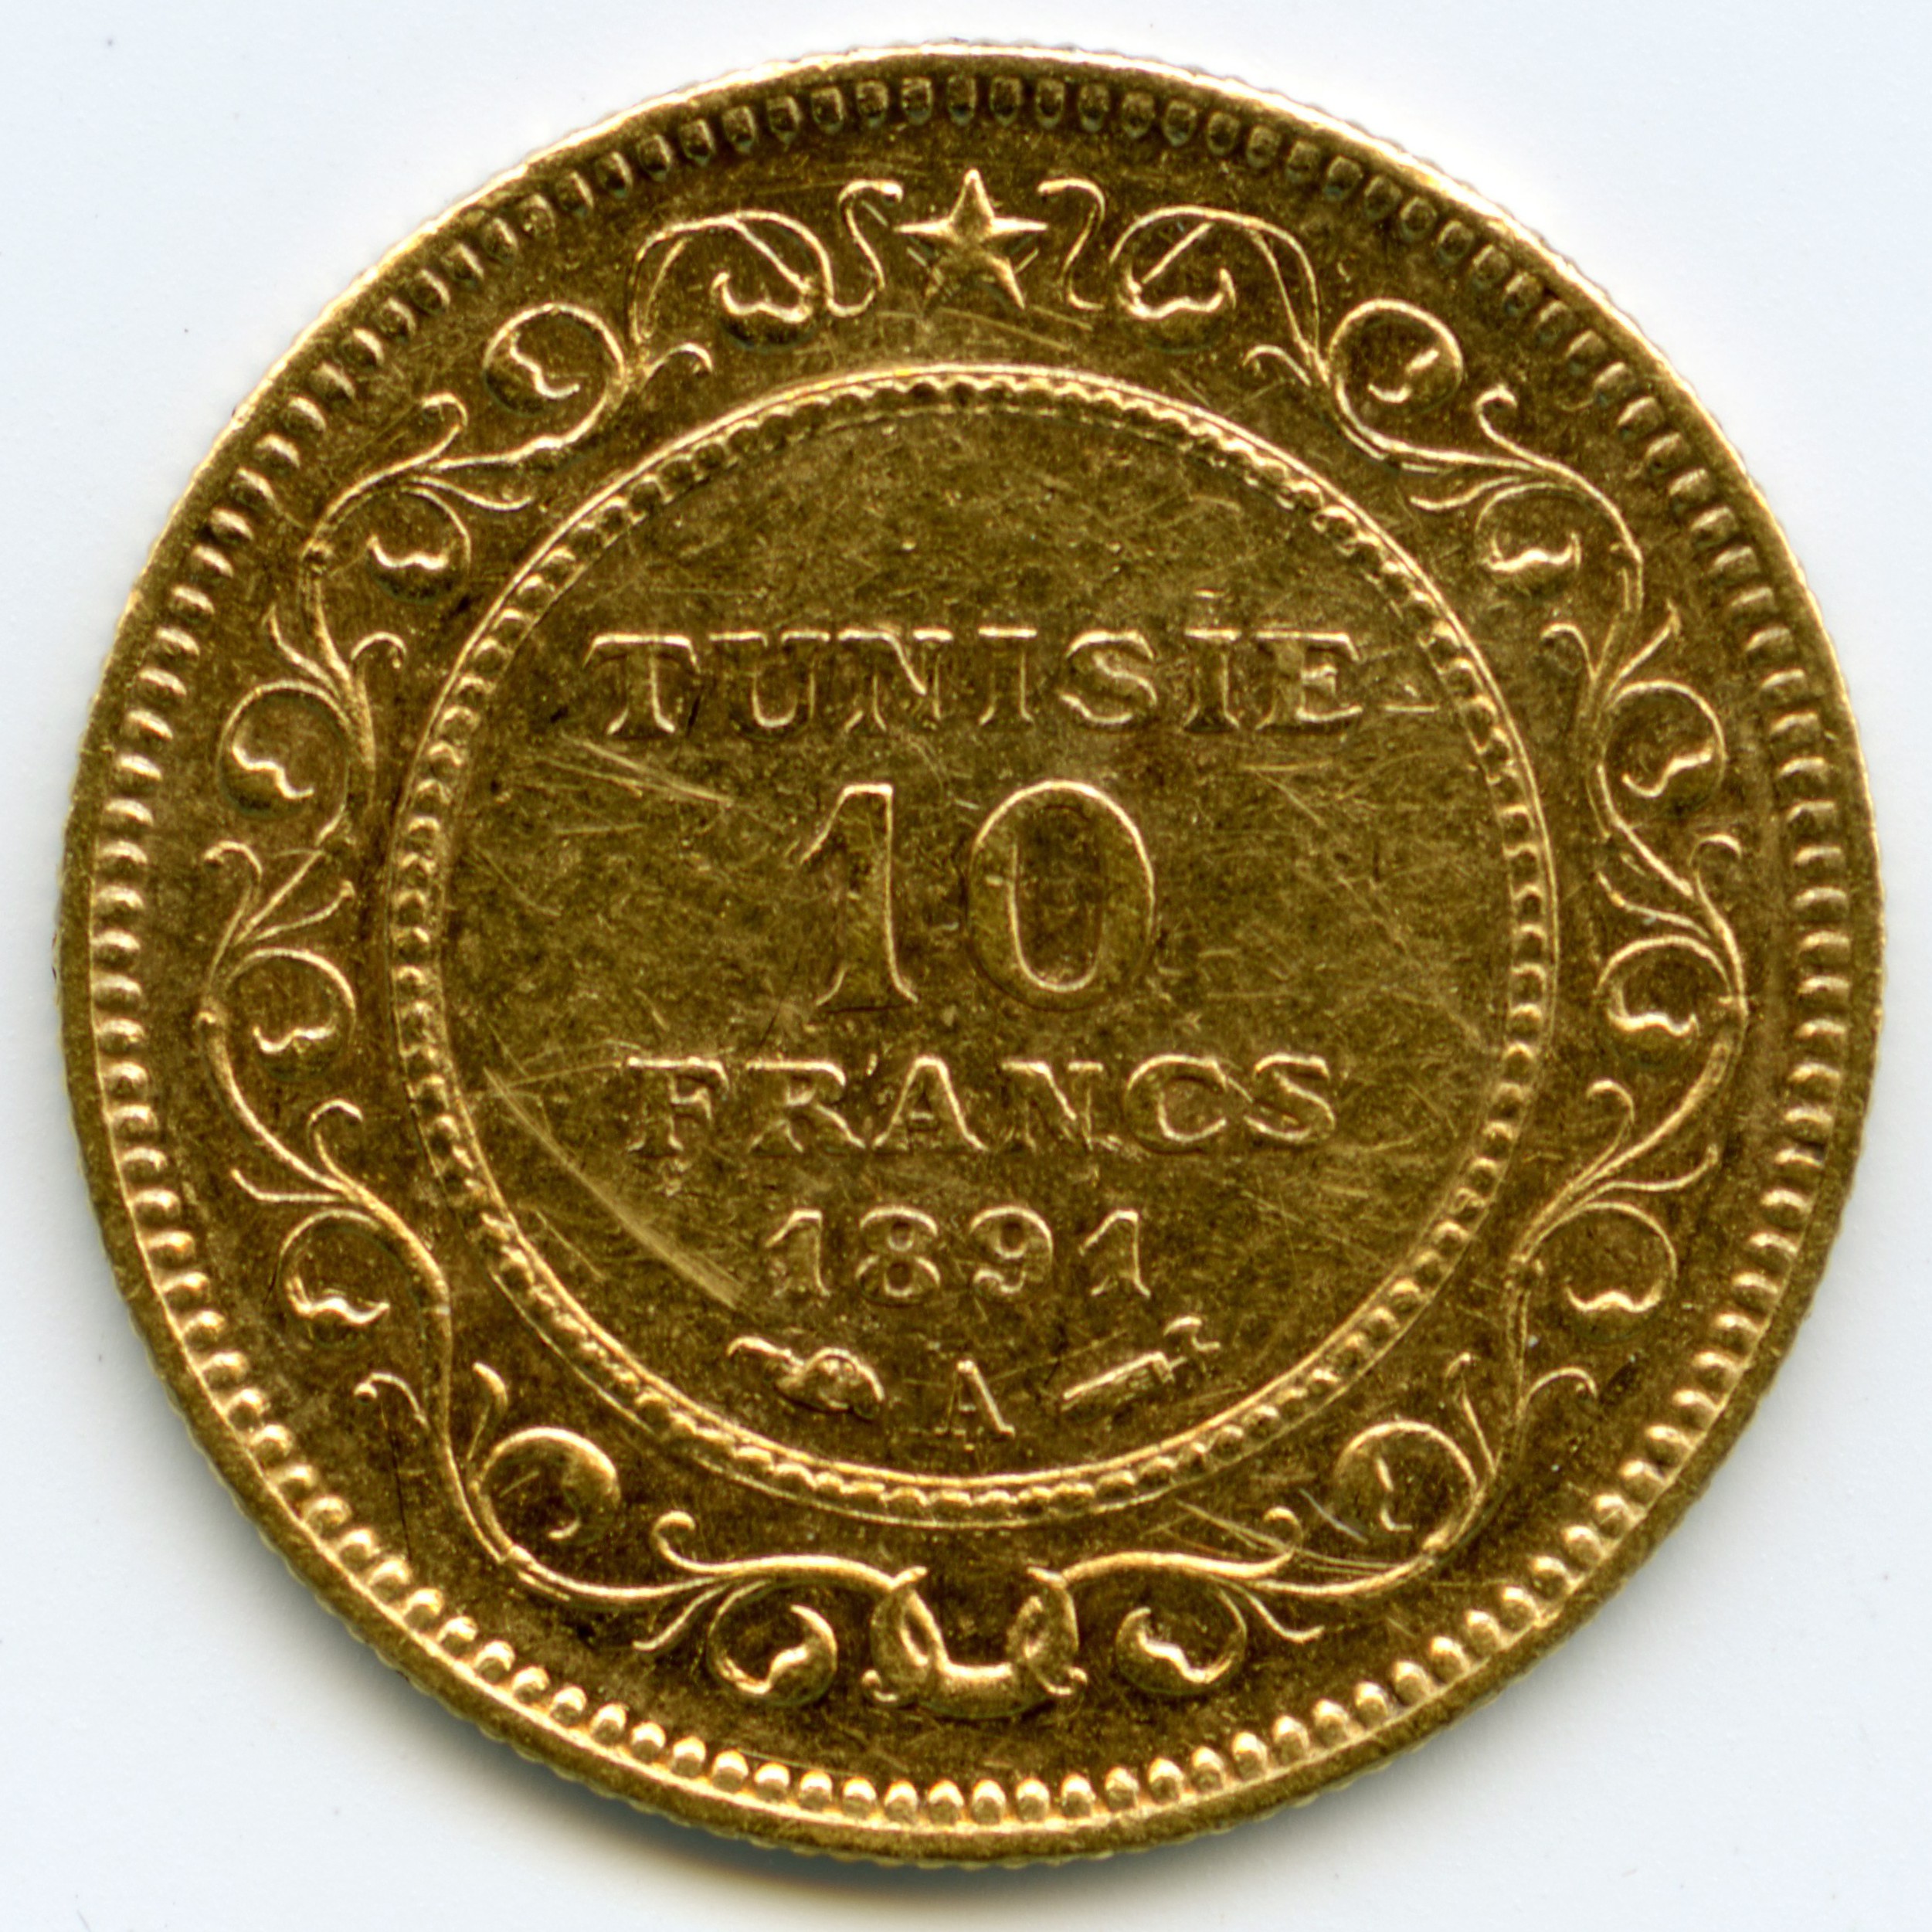 Tunisie - 10 Francs Tunis - 1891 A revers